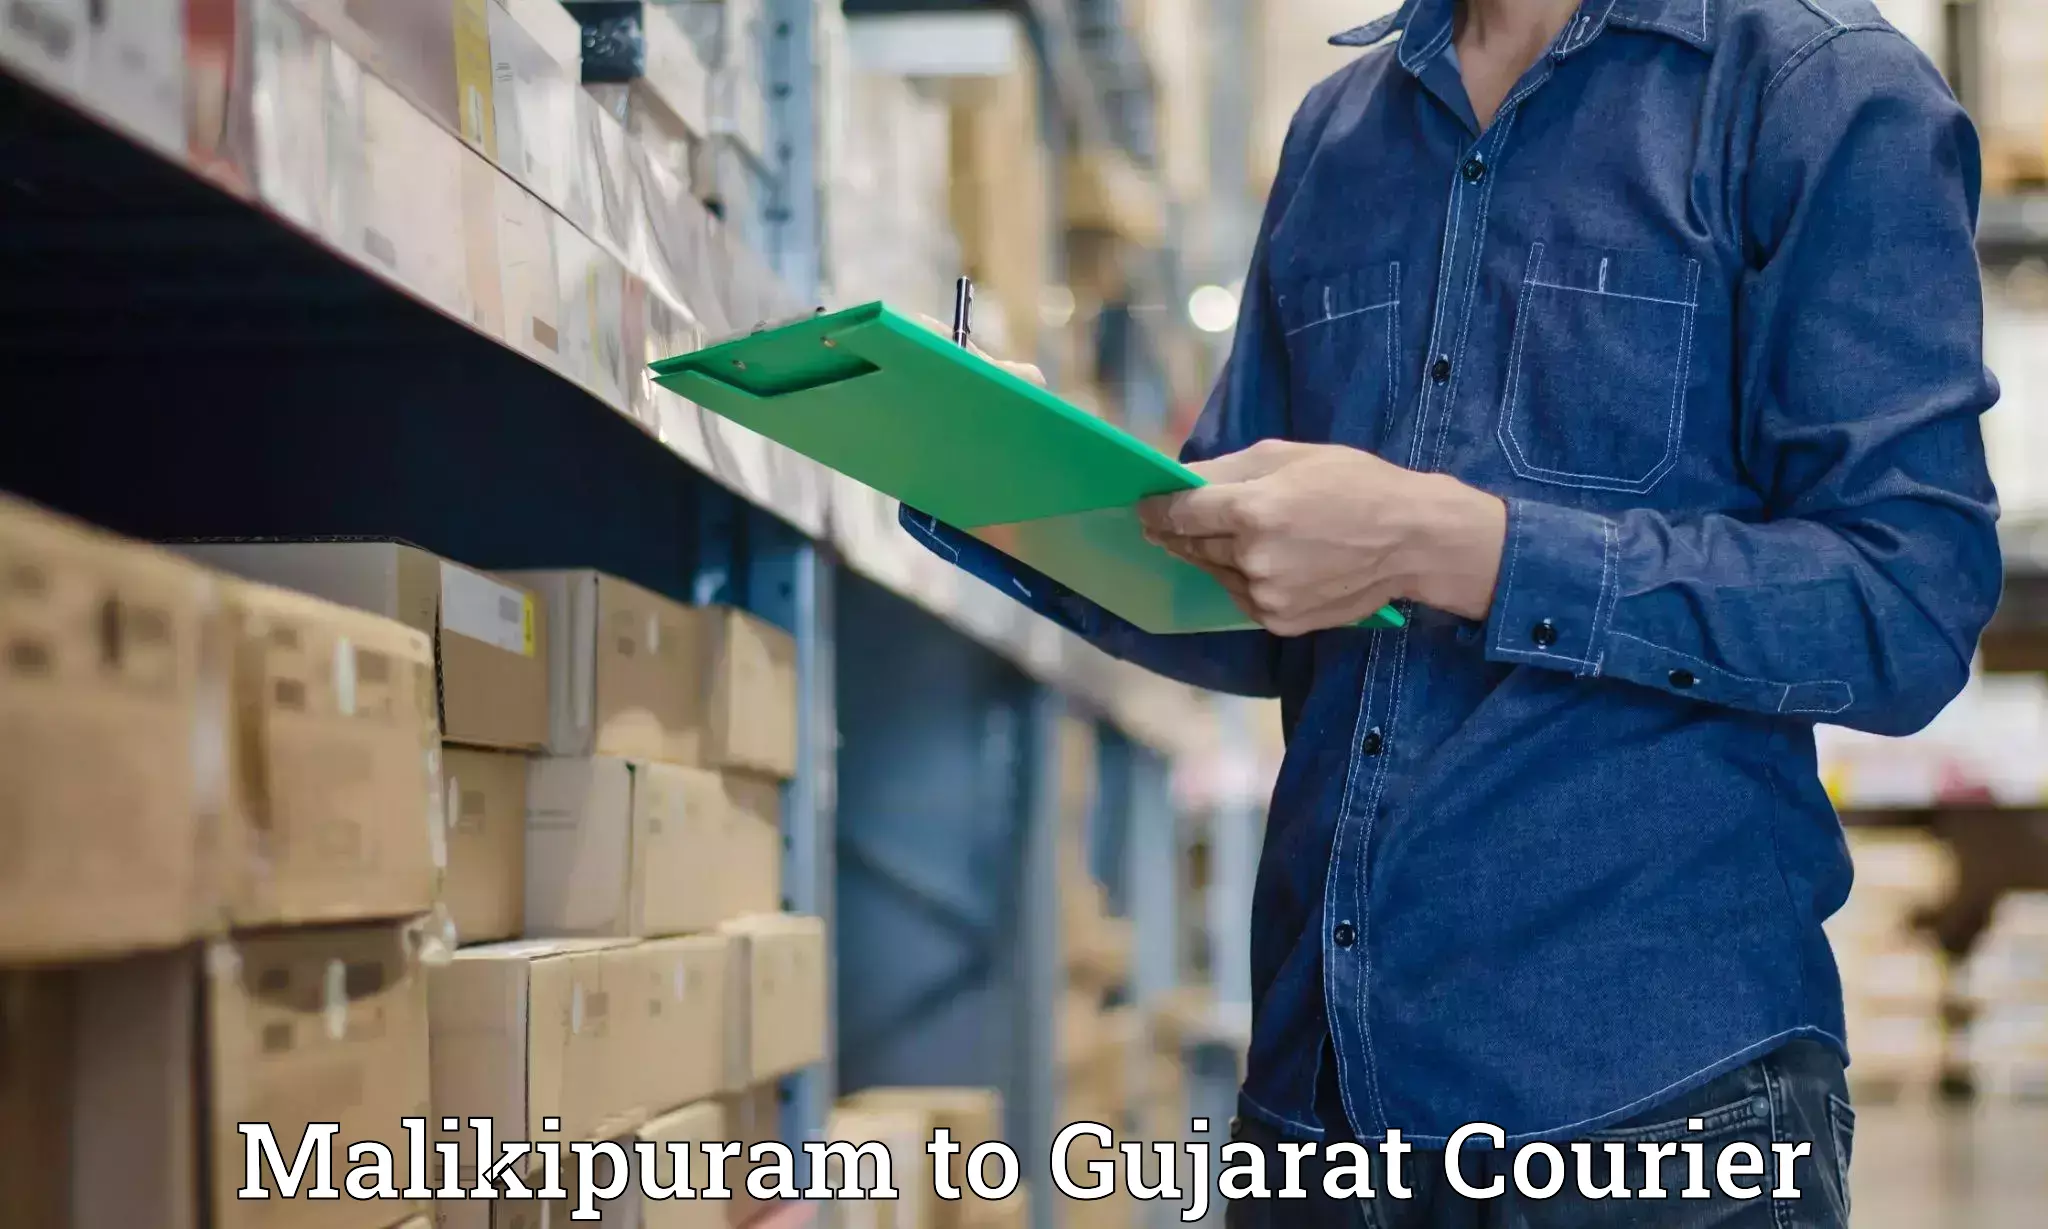 Doorstep delivery service Malikipuram to Gujarat